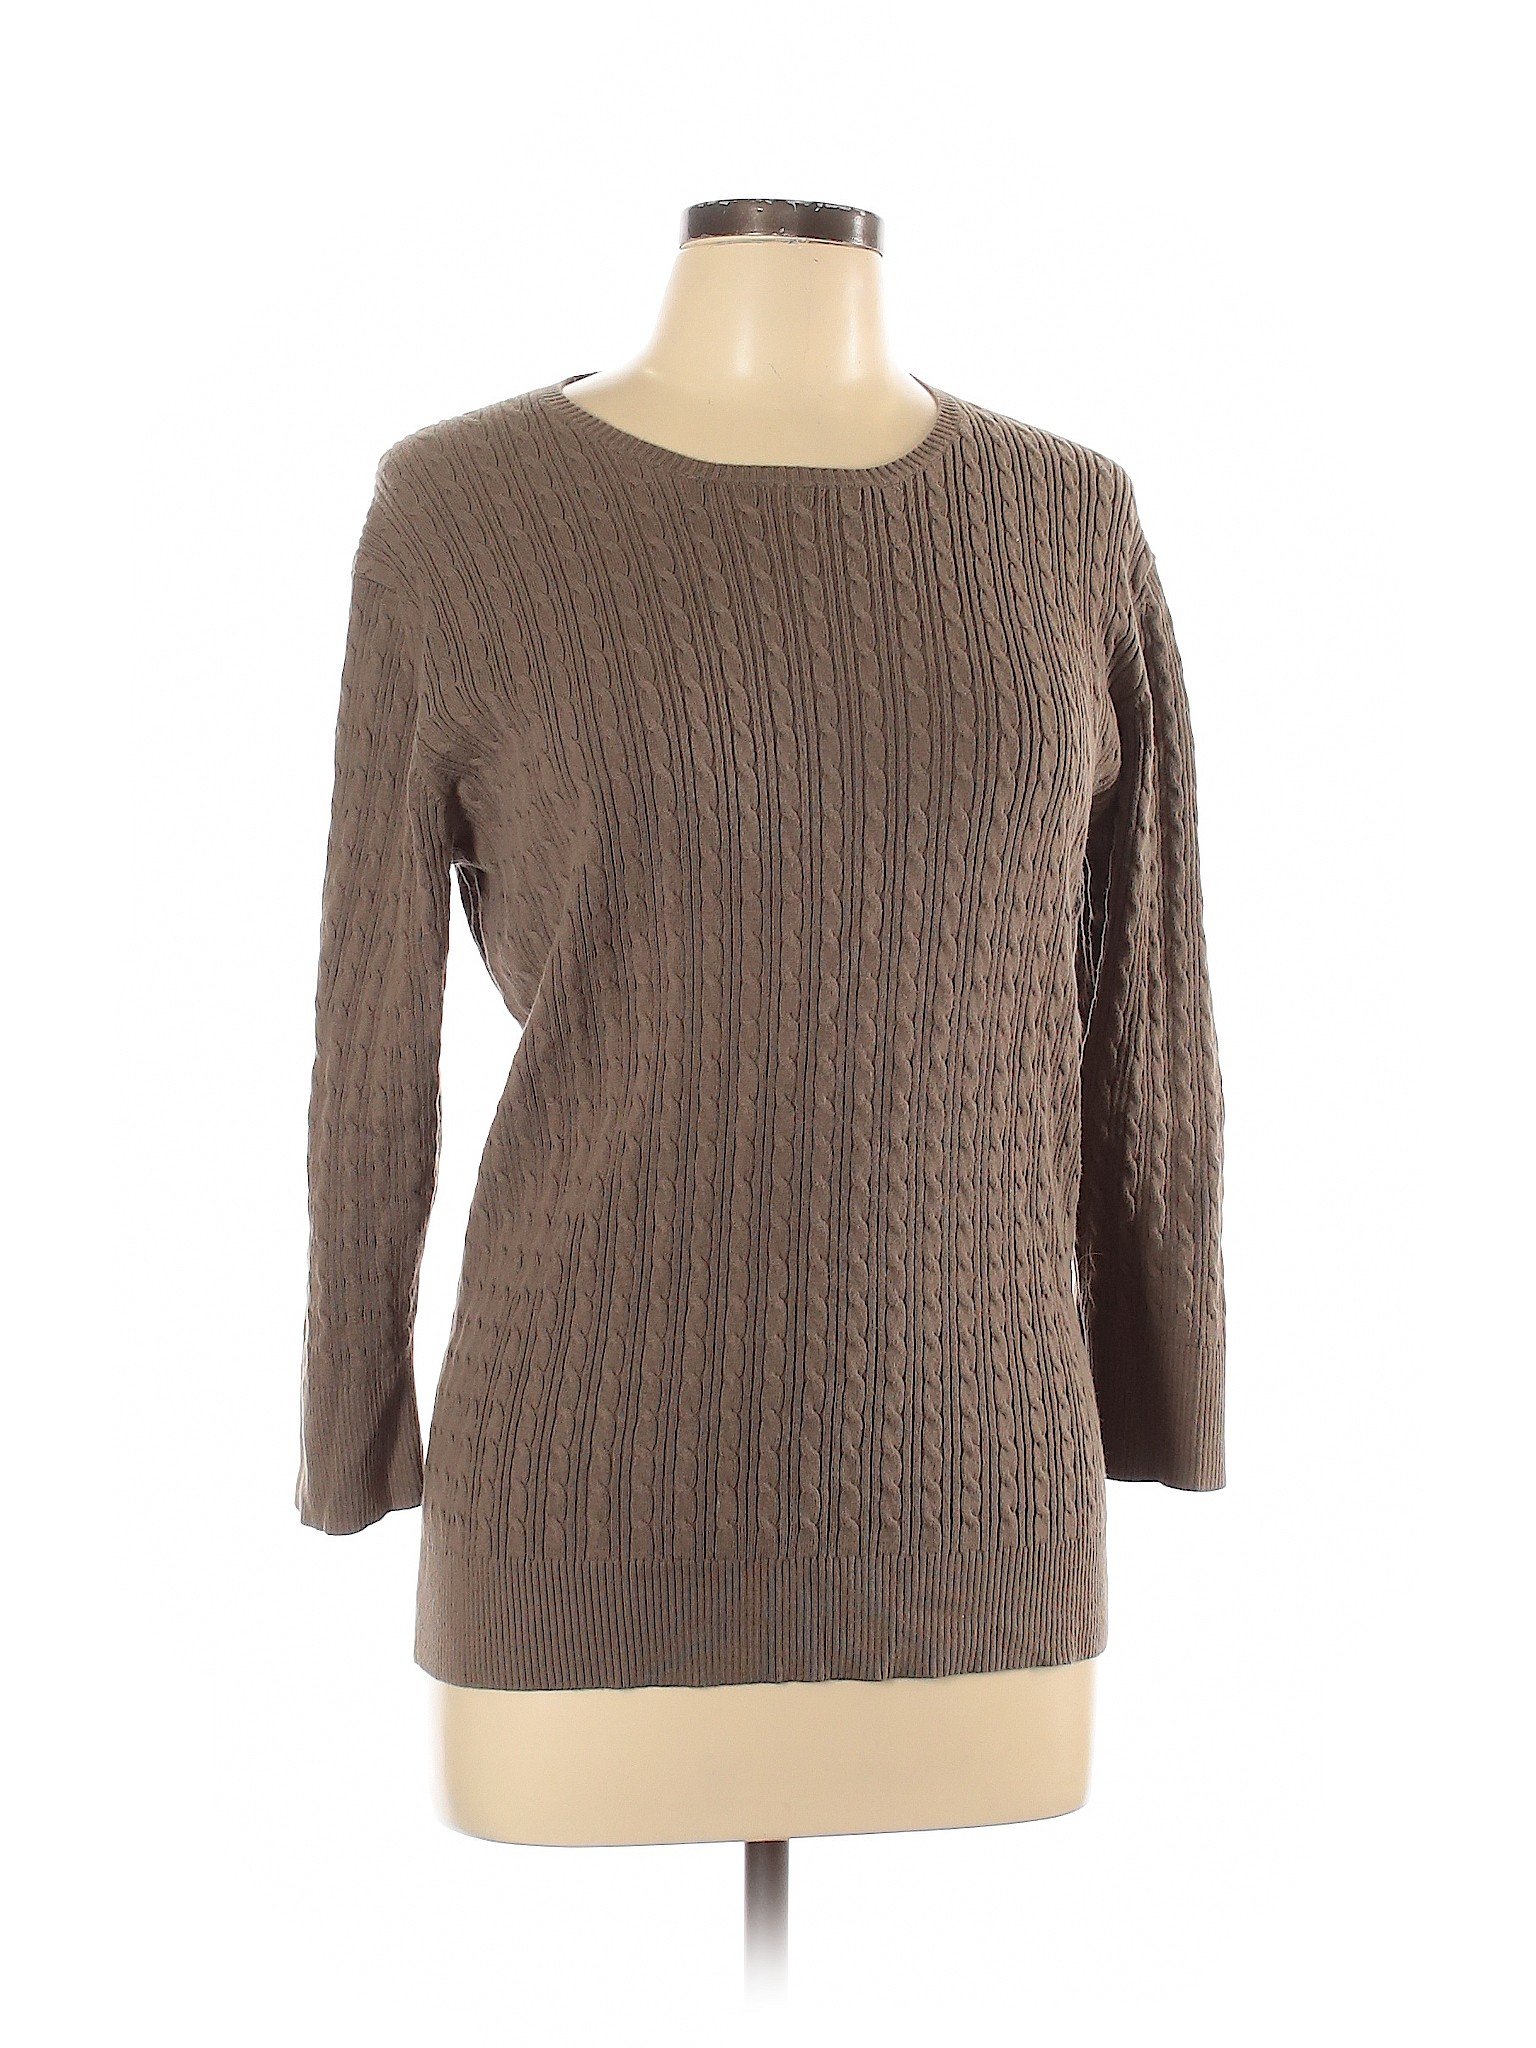 Gap Outlet Women Brown Pullover Sweater XL | eBay